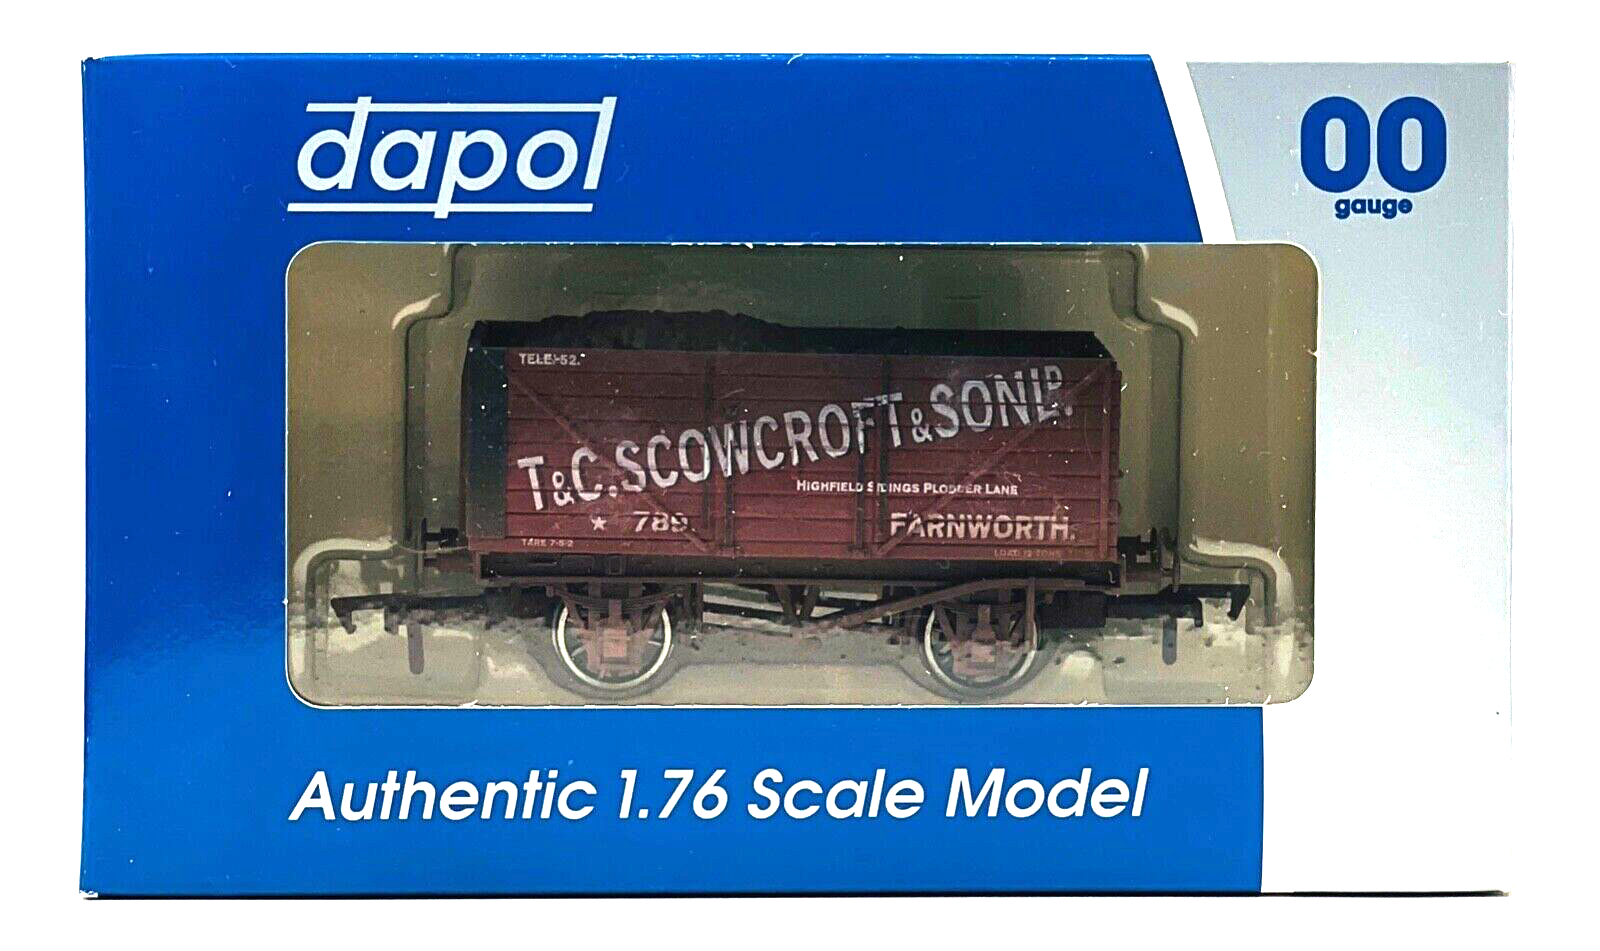 DAPOL 00 GAUGE - B889W - 'T & C SCOWCROFT' 8 PLANK WAGON WEATHERED - BOXED